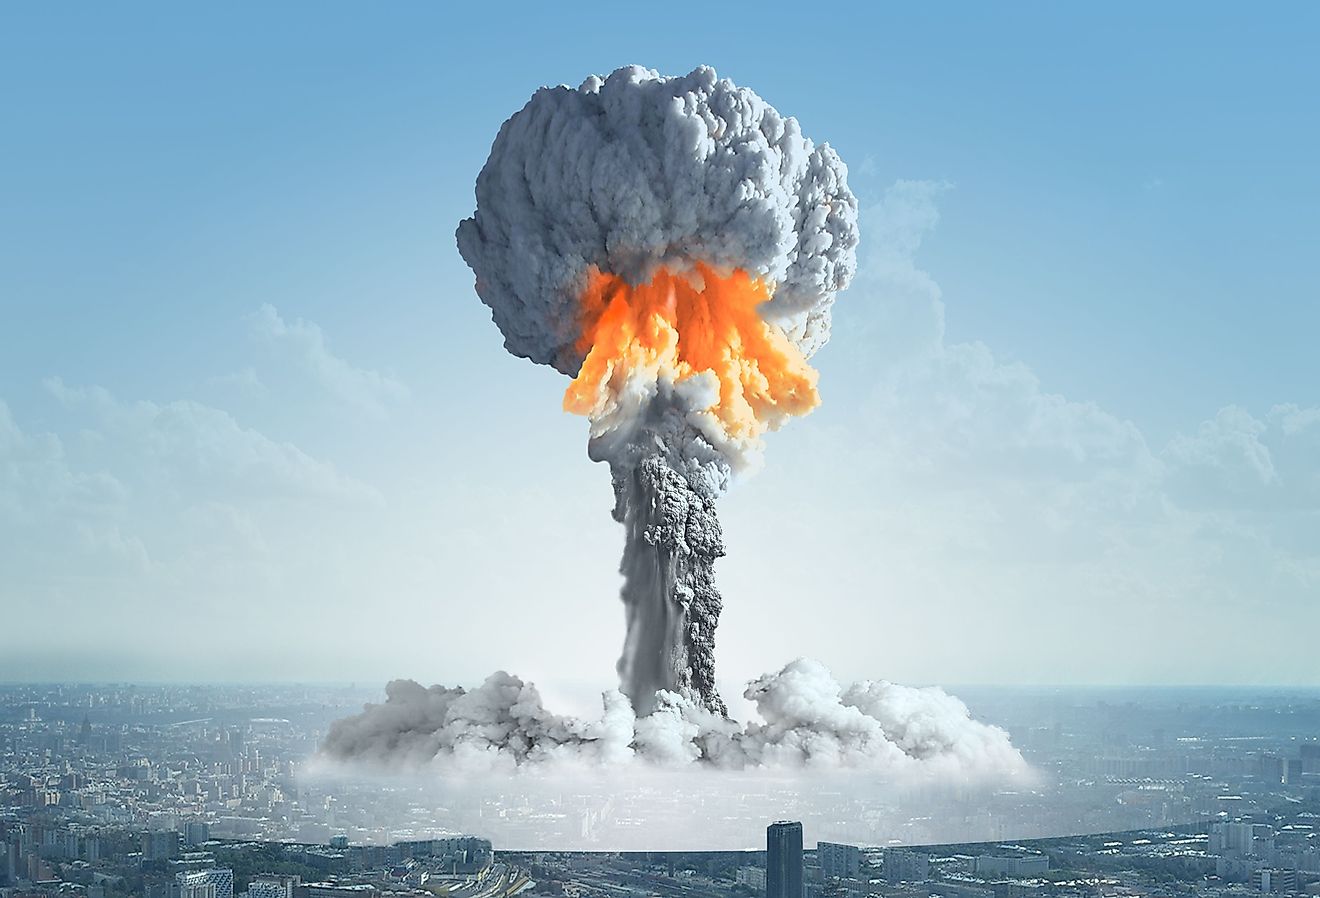 The devastating atomic bombing of a city. Image credit KREML via Shutterstock